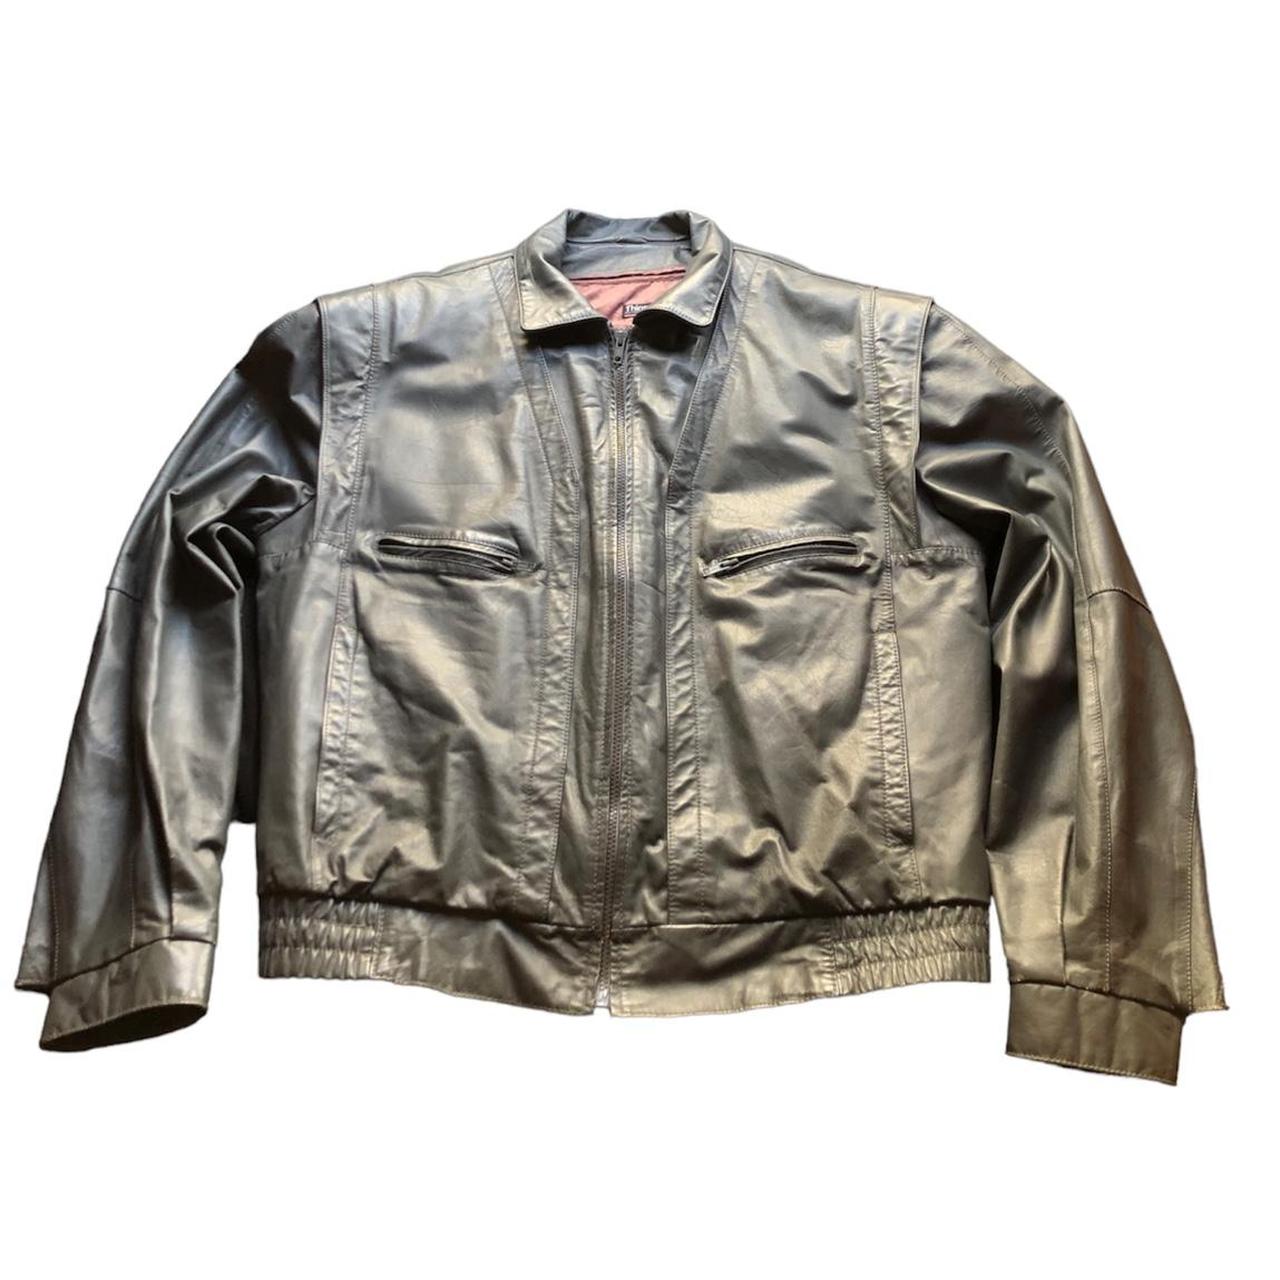 Product Image 1 - Bermans Leather Jacket
size XL 
no